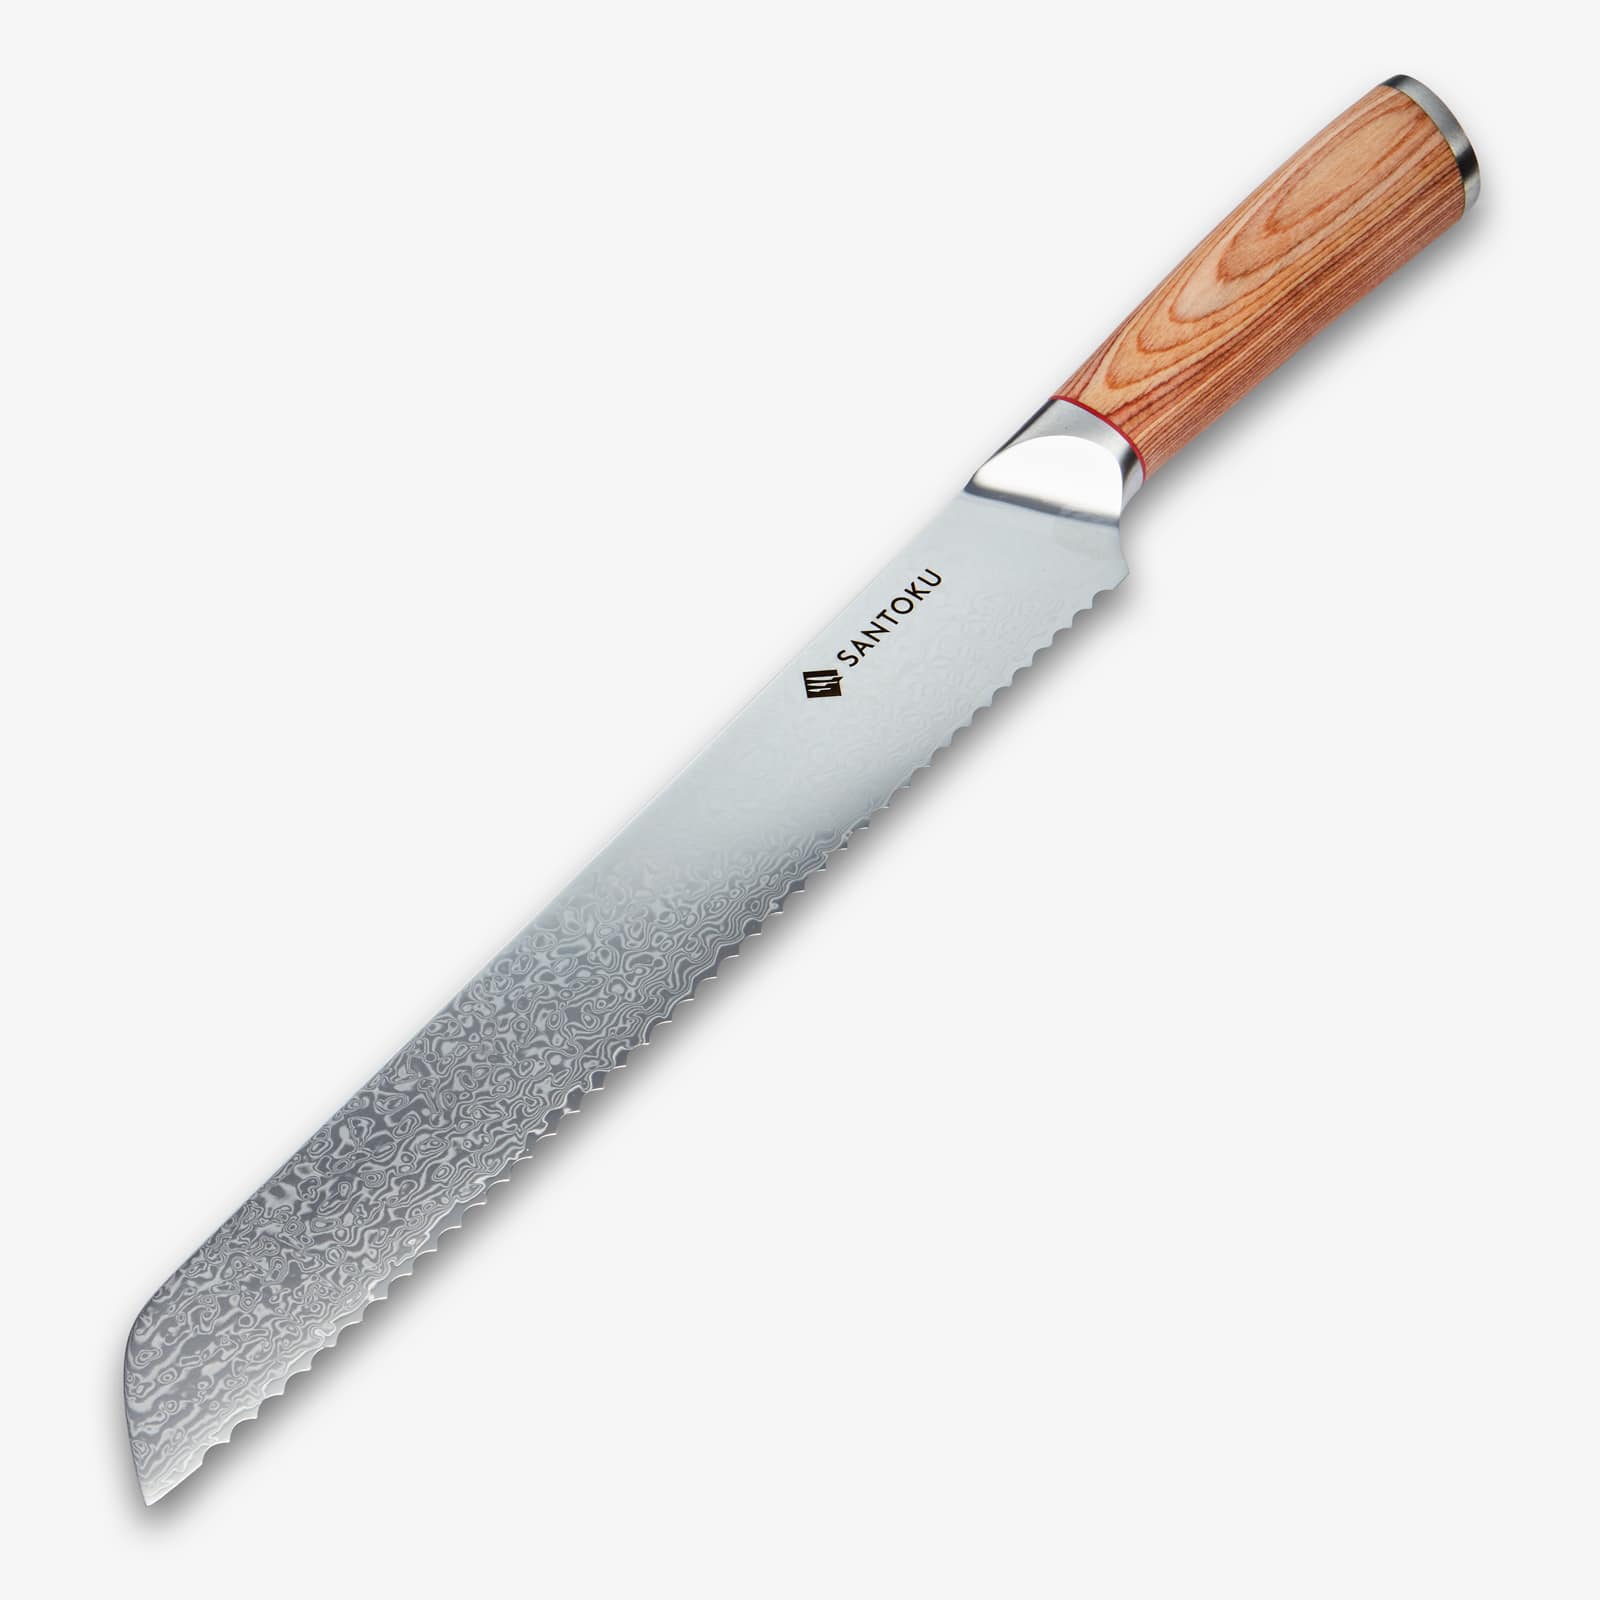 हरुता (はる た) 10 इंच की रोटी चाकू